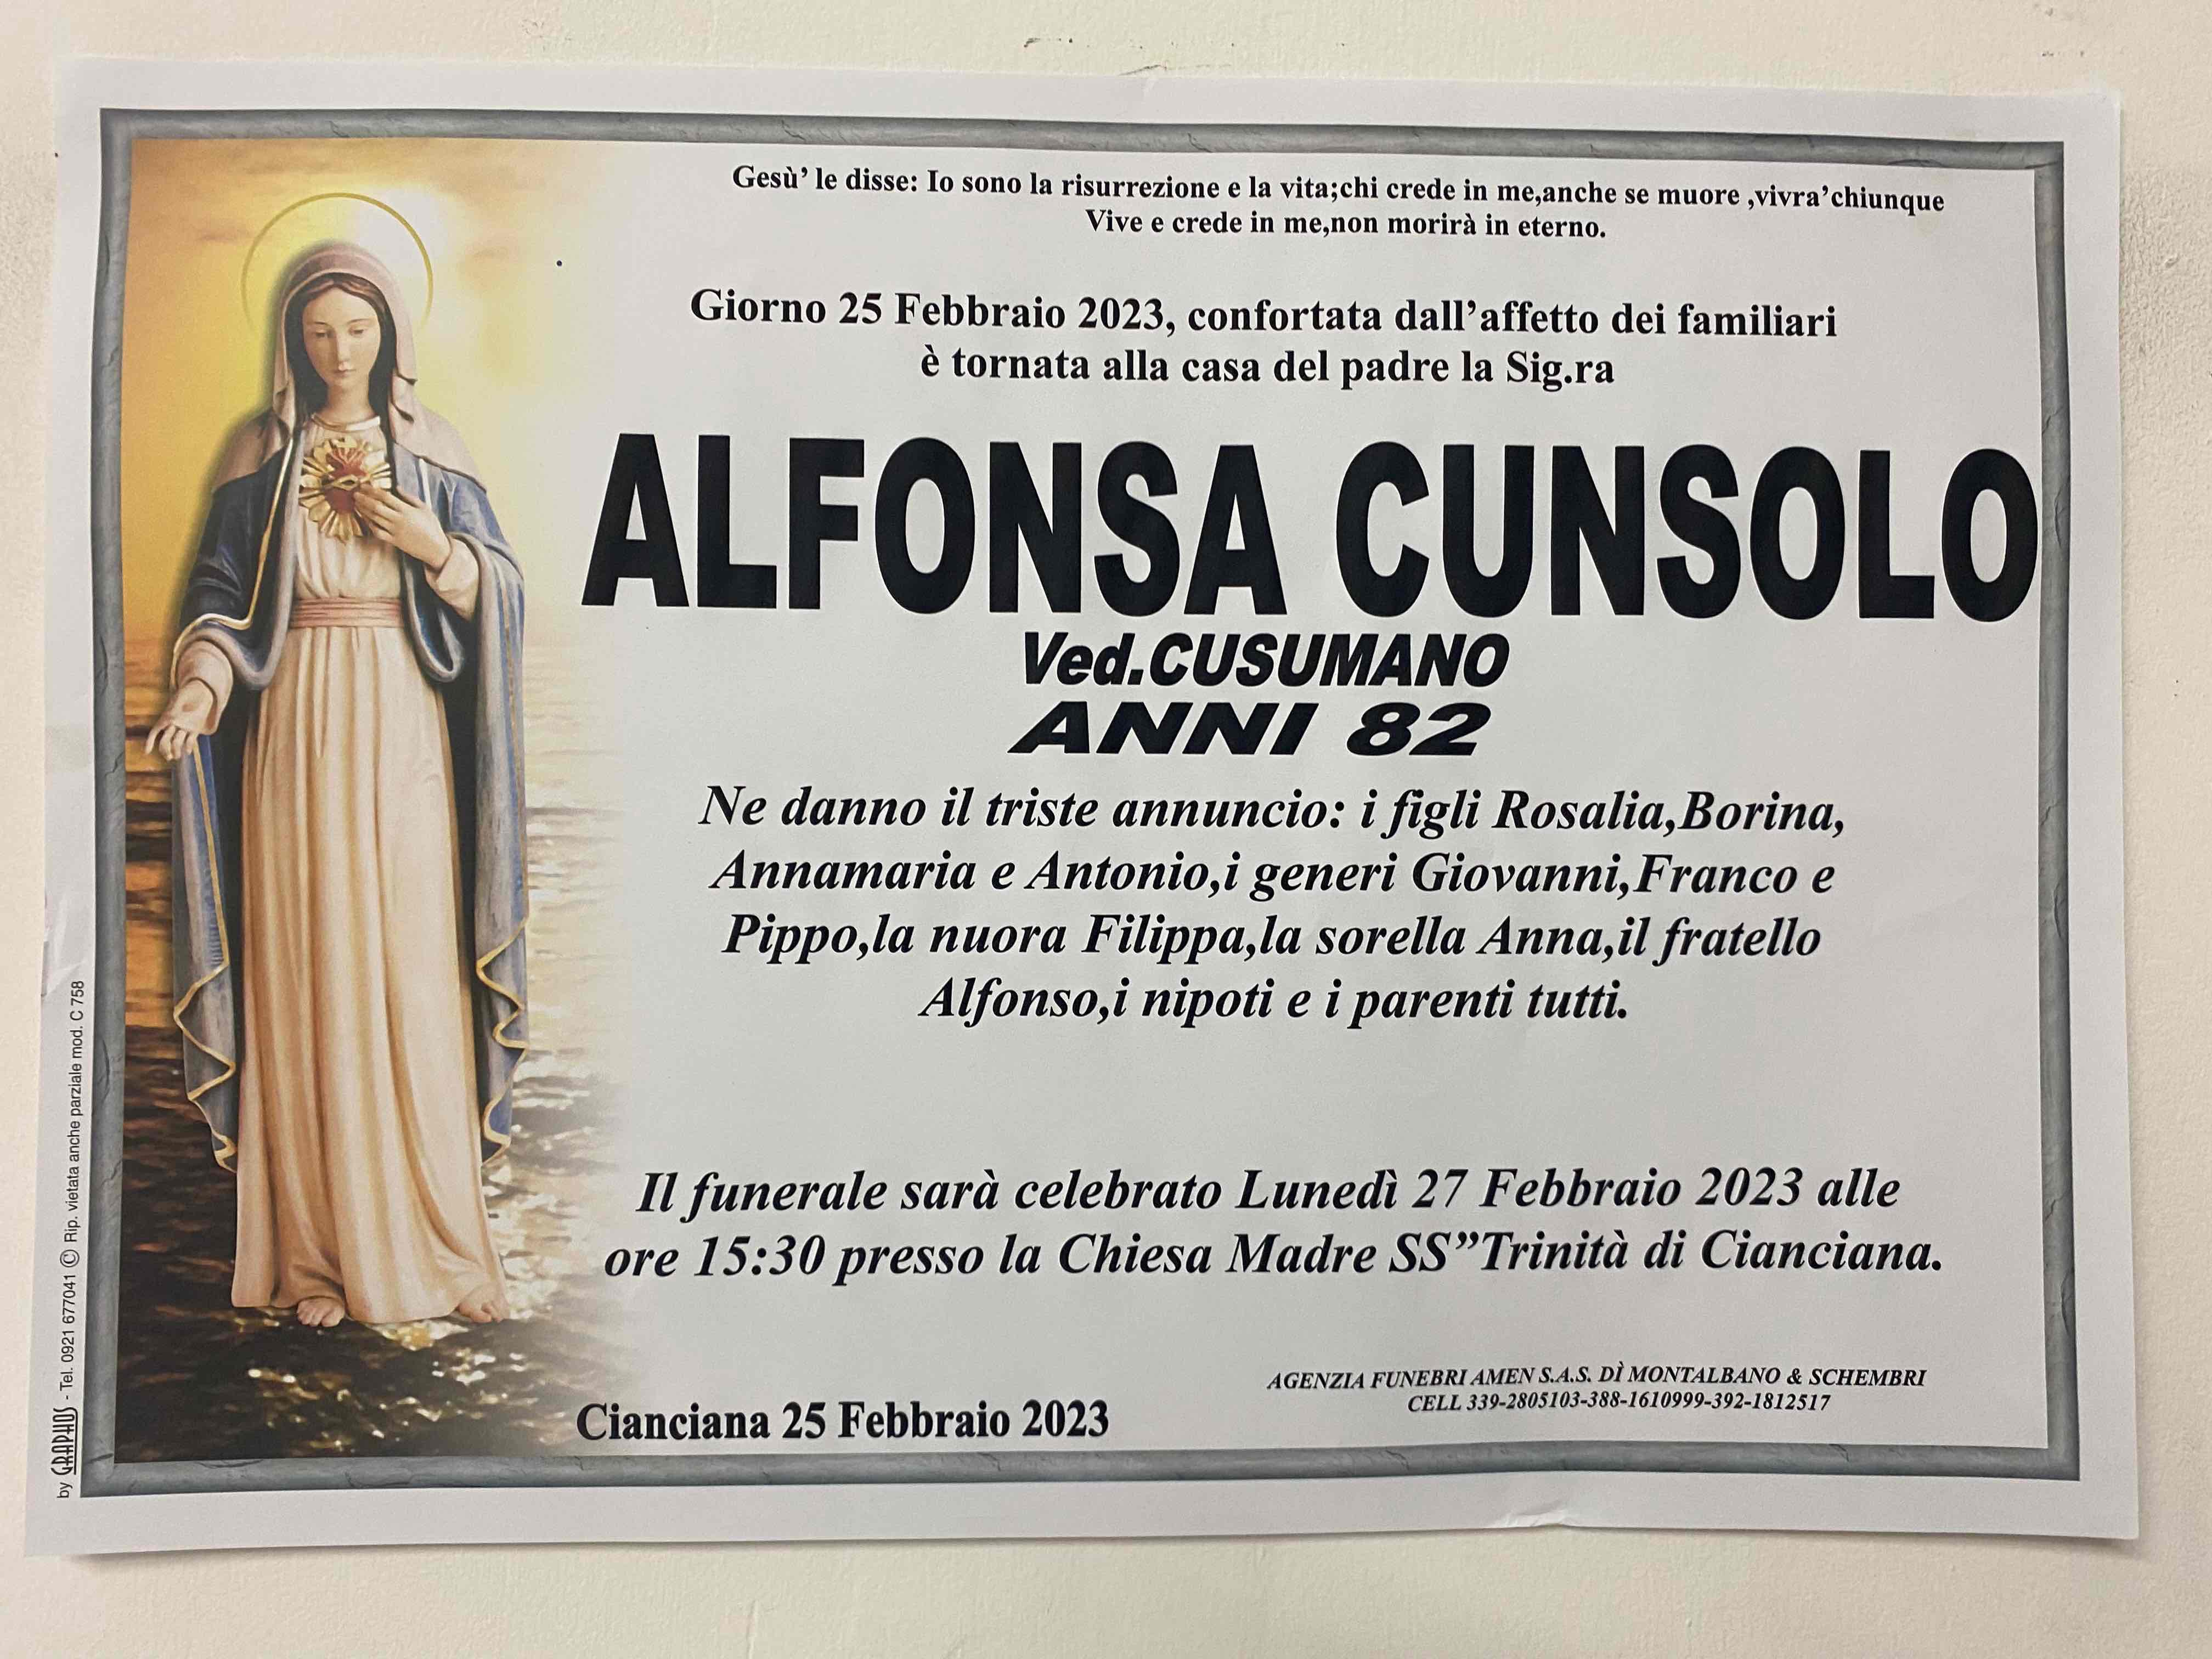 Alfonsa Cunsolo